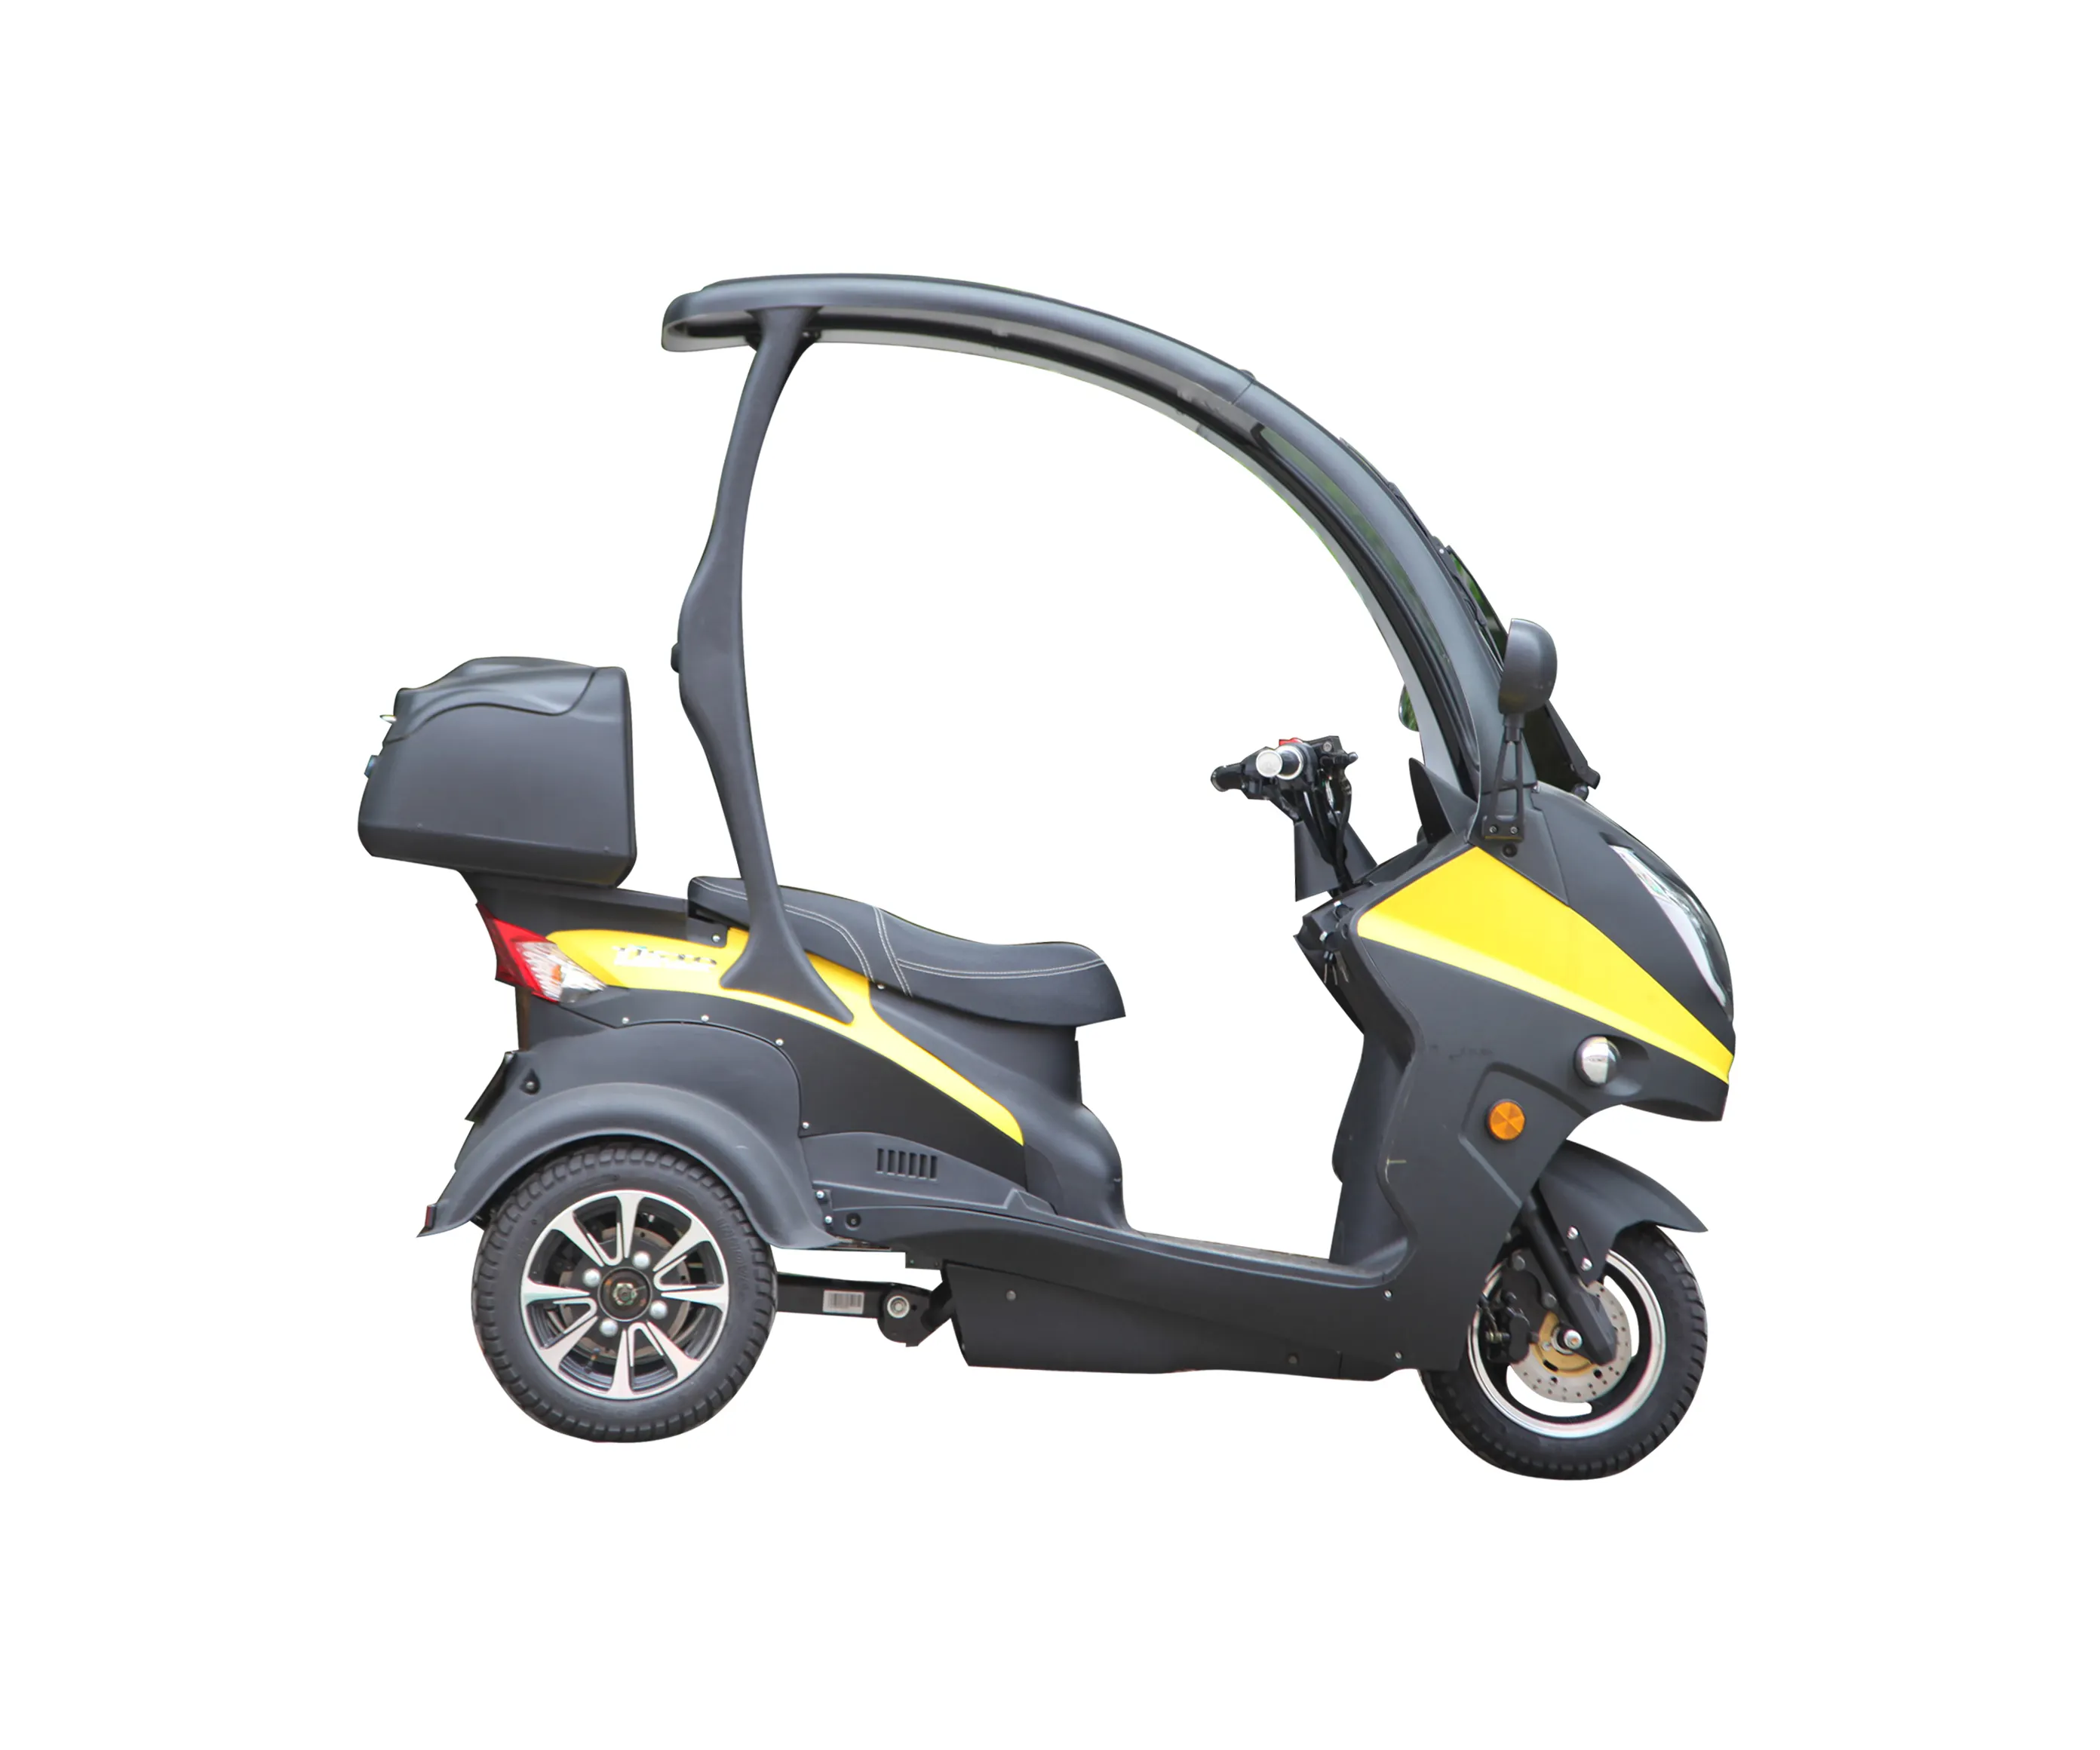 Elektrikli scooter 3 kişilik elektrikli otomobil yetişkin araba koltukları hafif carro el ctrico para adultos mini araba mavi dls06